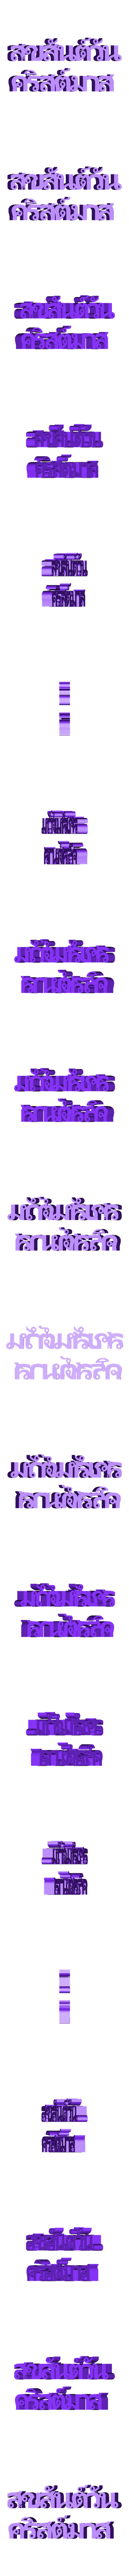 Thai.stl STL-Datei Christmas Lettering Blocks kostenlos herunterladen • 3D-druckbares Modell, tone001